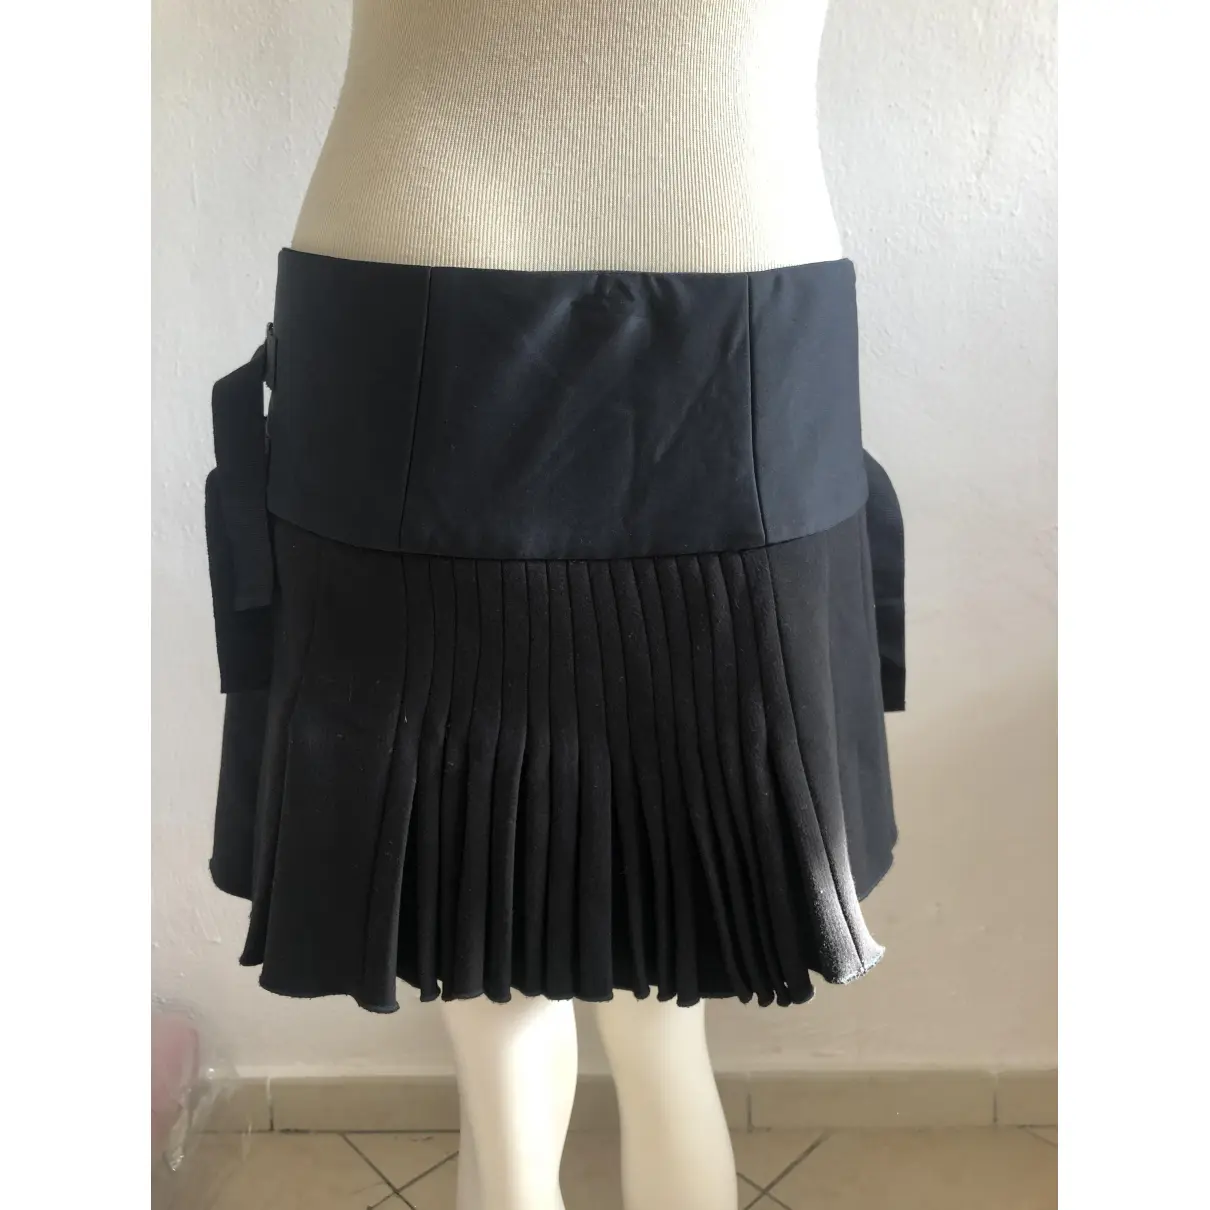 Buy Just Cavalli Wool mini skirt online